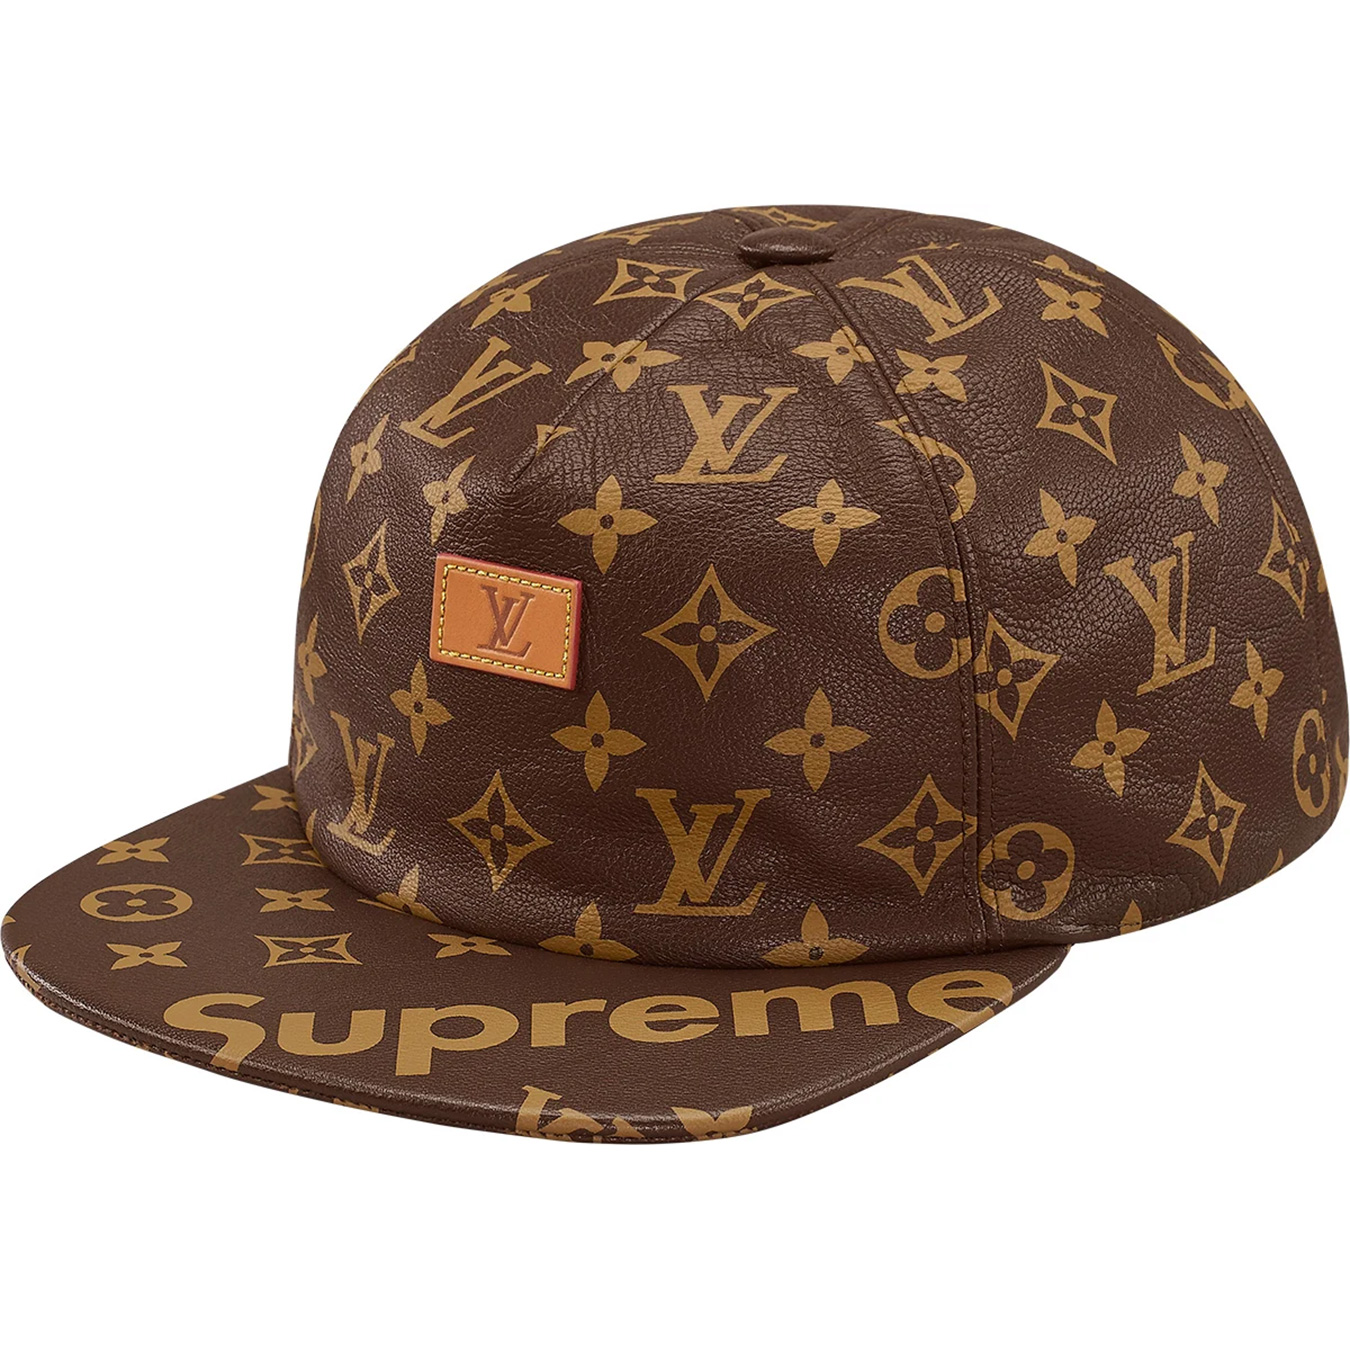 Louis Vuitton/Supreme 5-Panel Hat